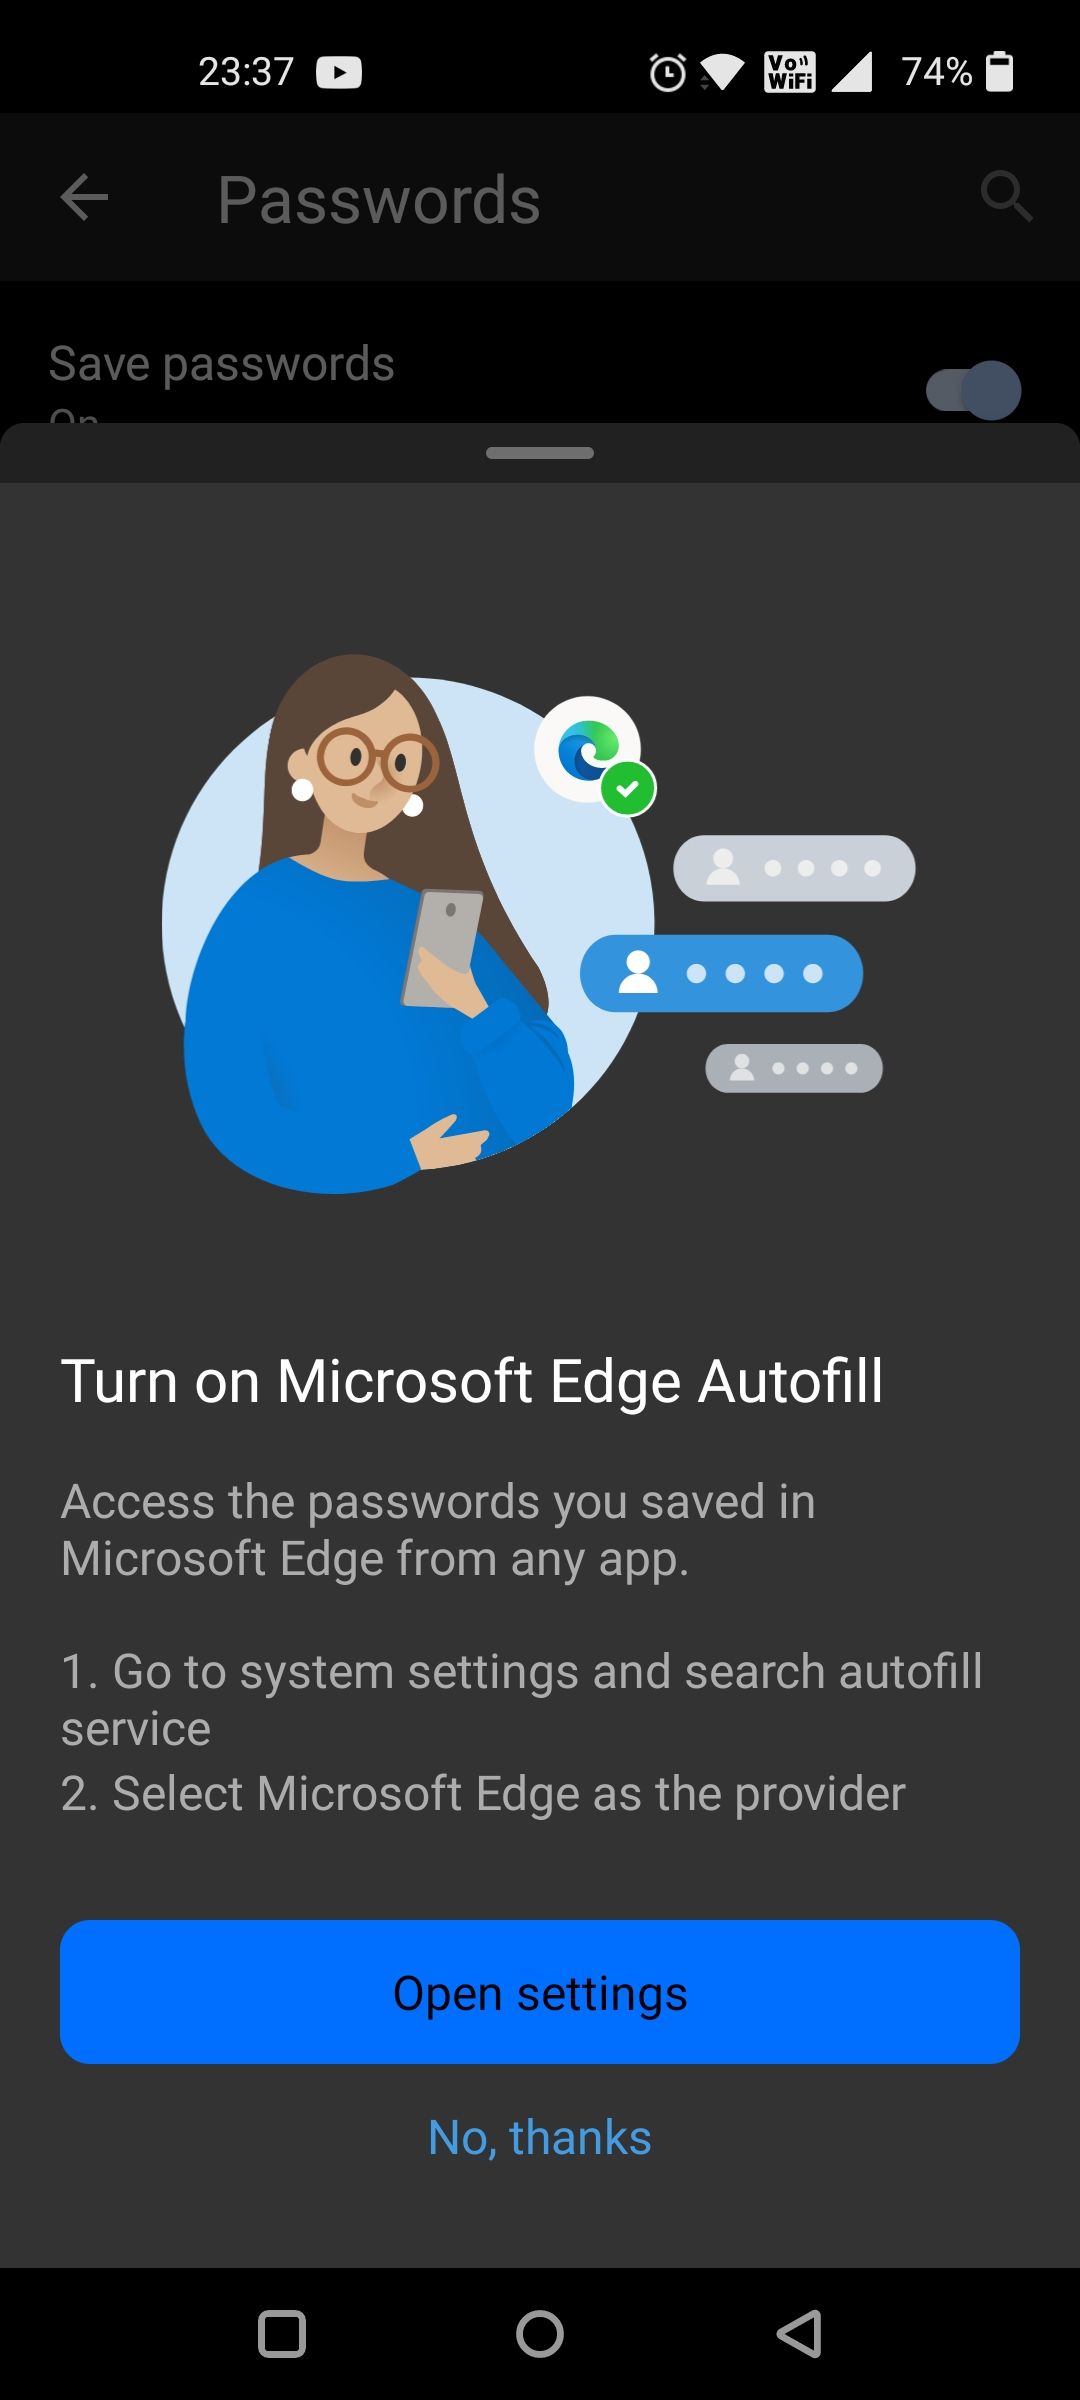 2.Microsoft-Edge-Autofill-to-Access-Passwords